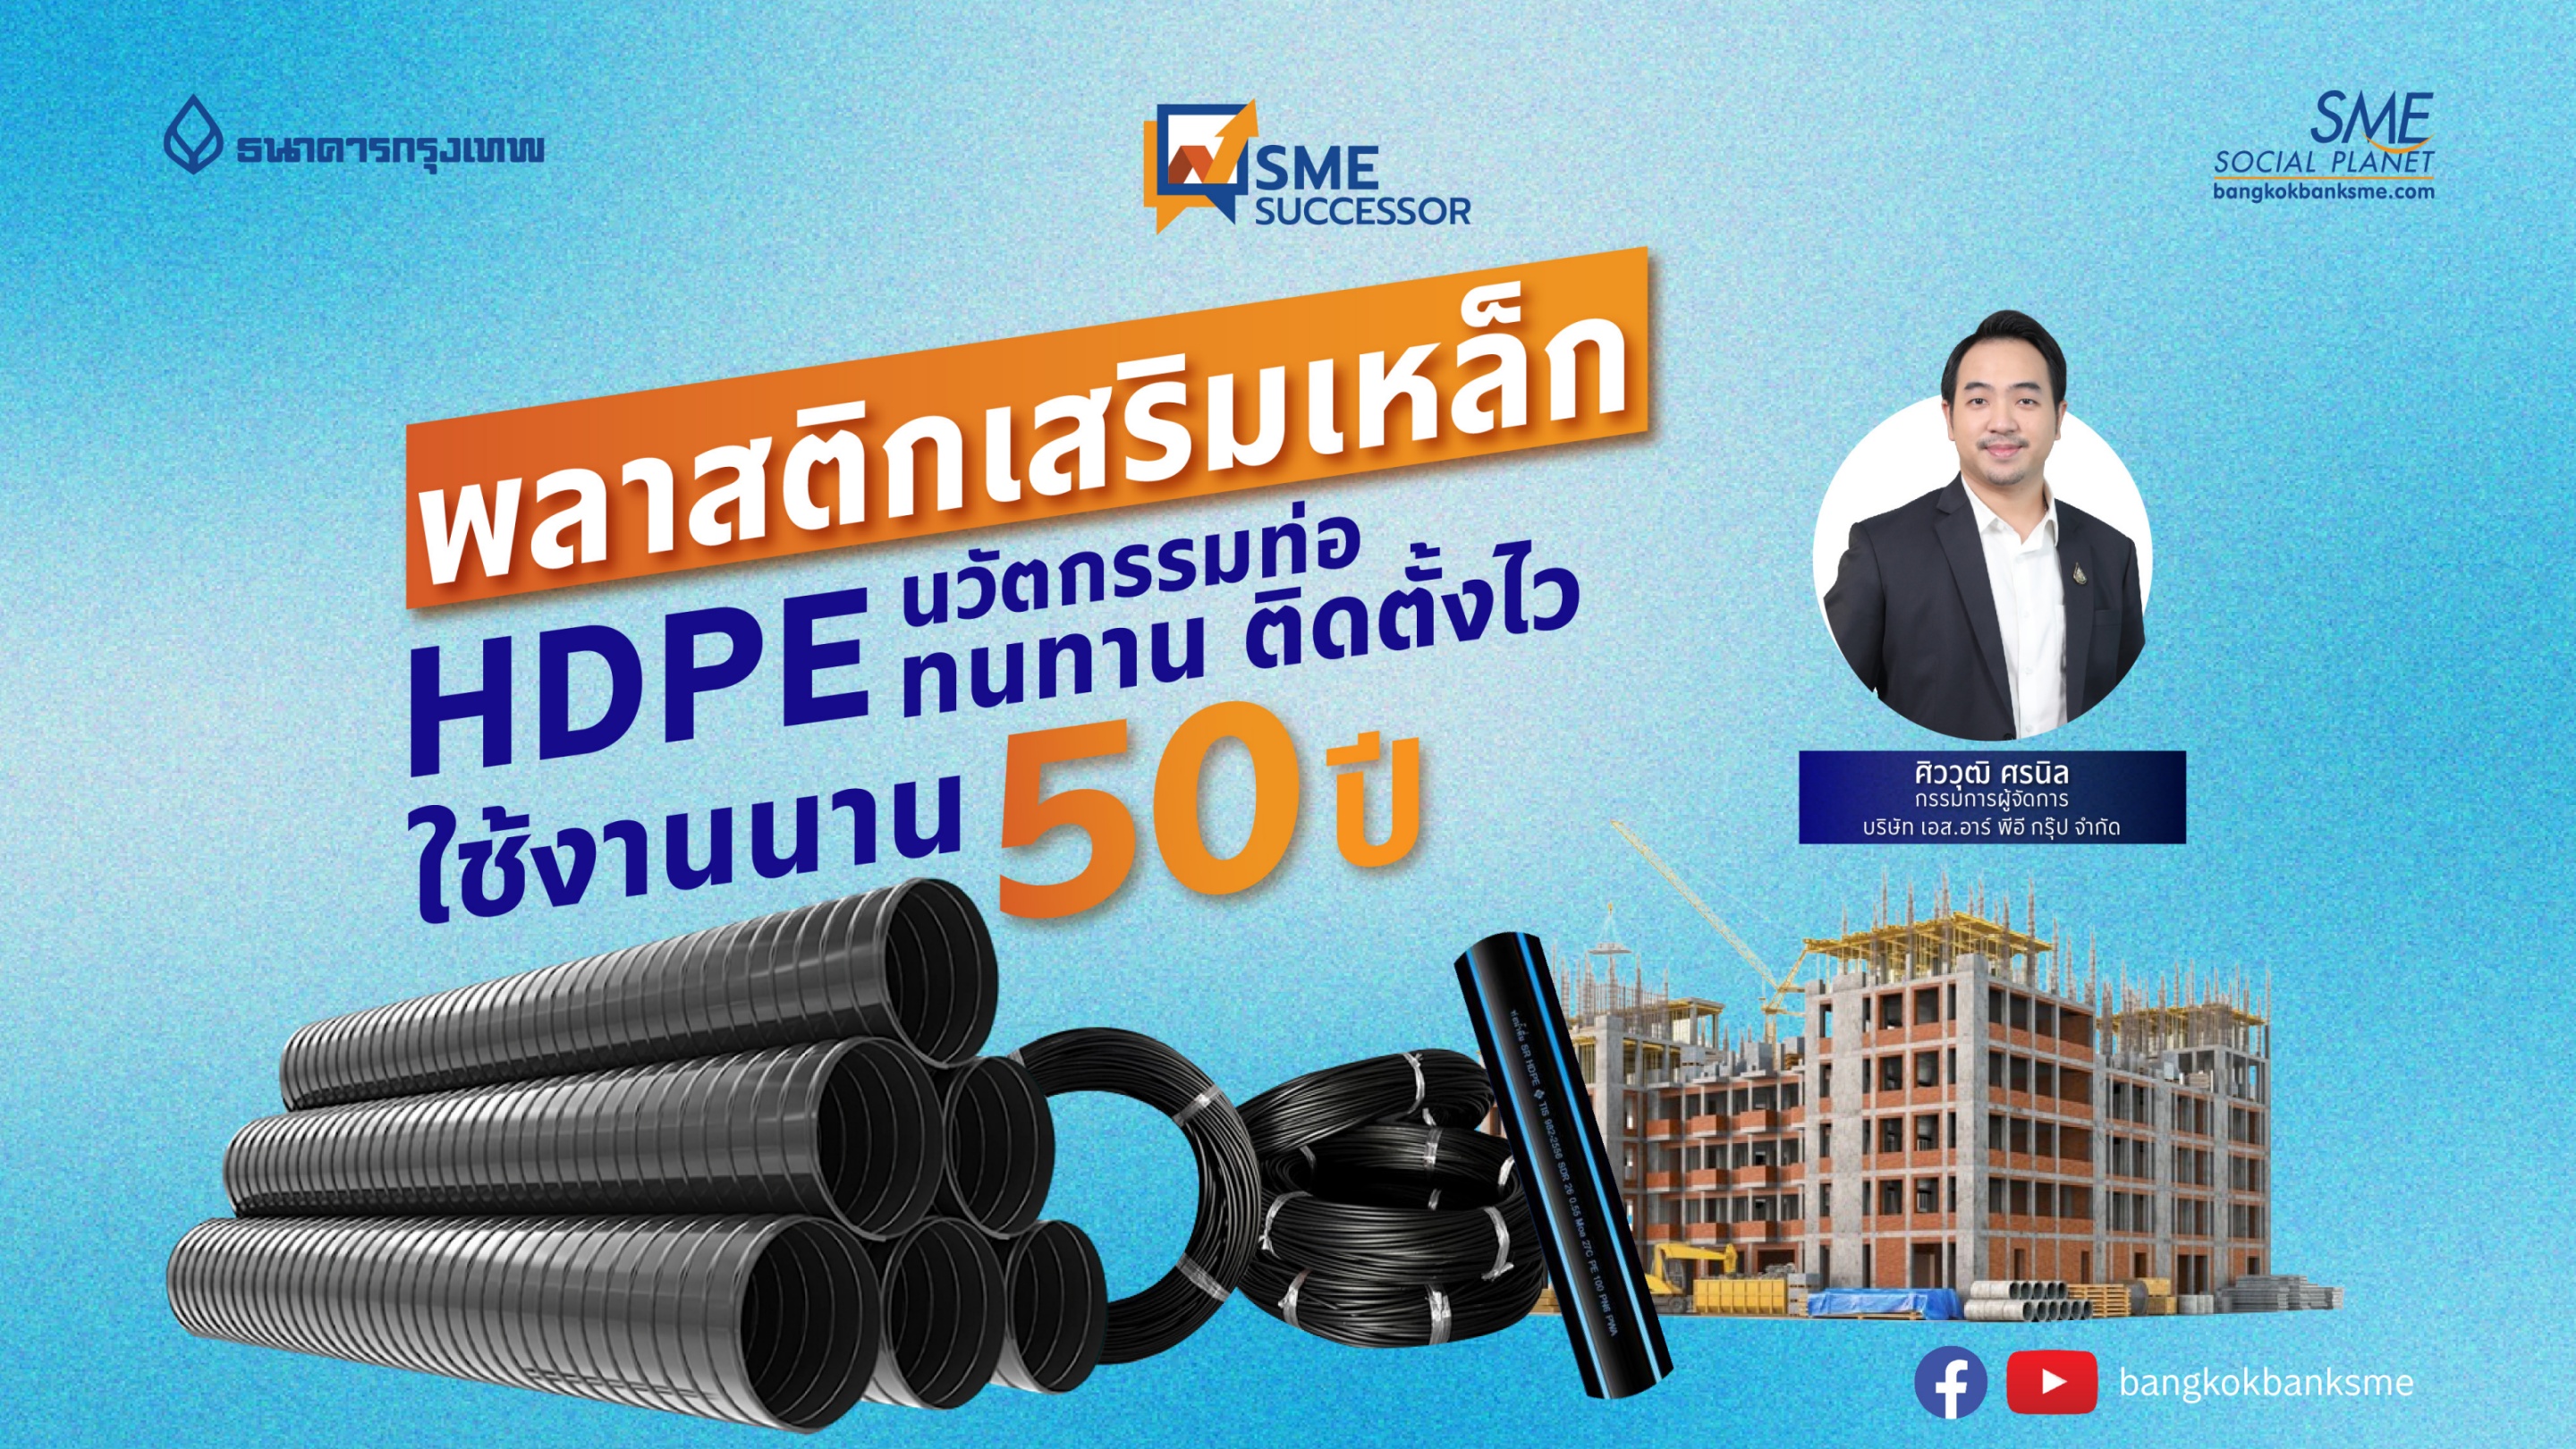 SME Successor Ep:23 | พลาสติกเสริมเหล็ก HDPE นวัตกรรมท่อทนทาน ติดตั้งไว้ ใช้งานนาน 50 ปี